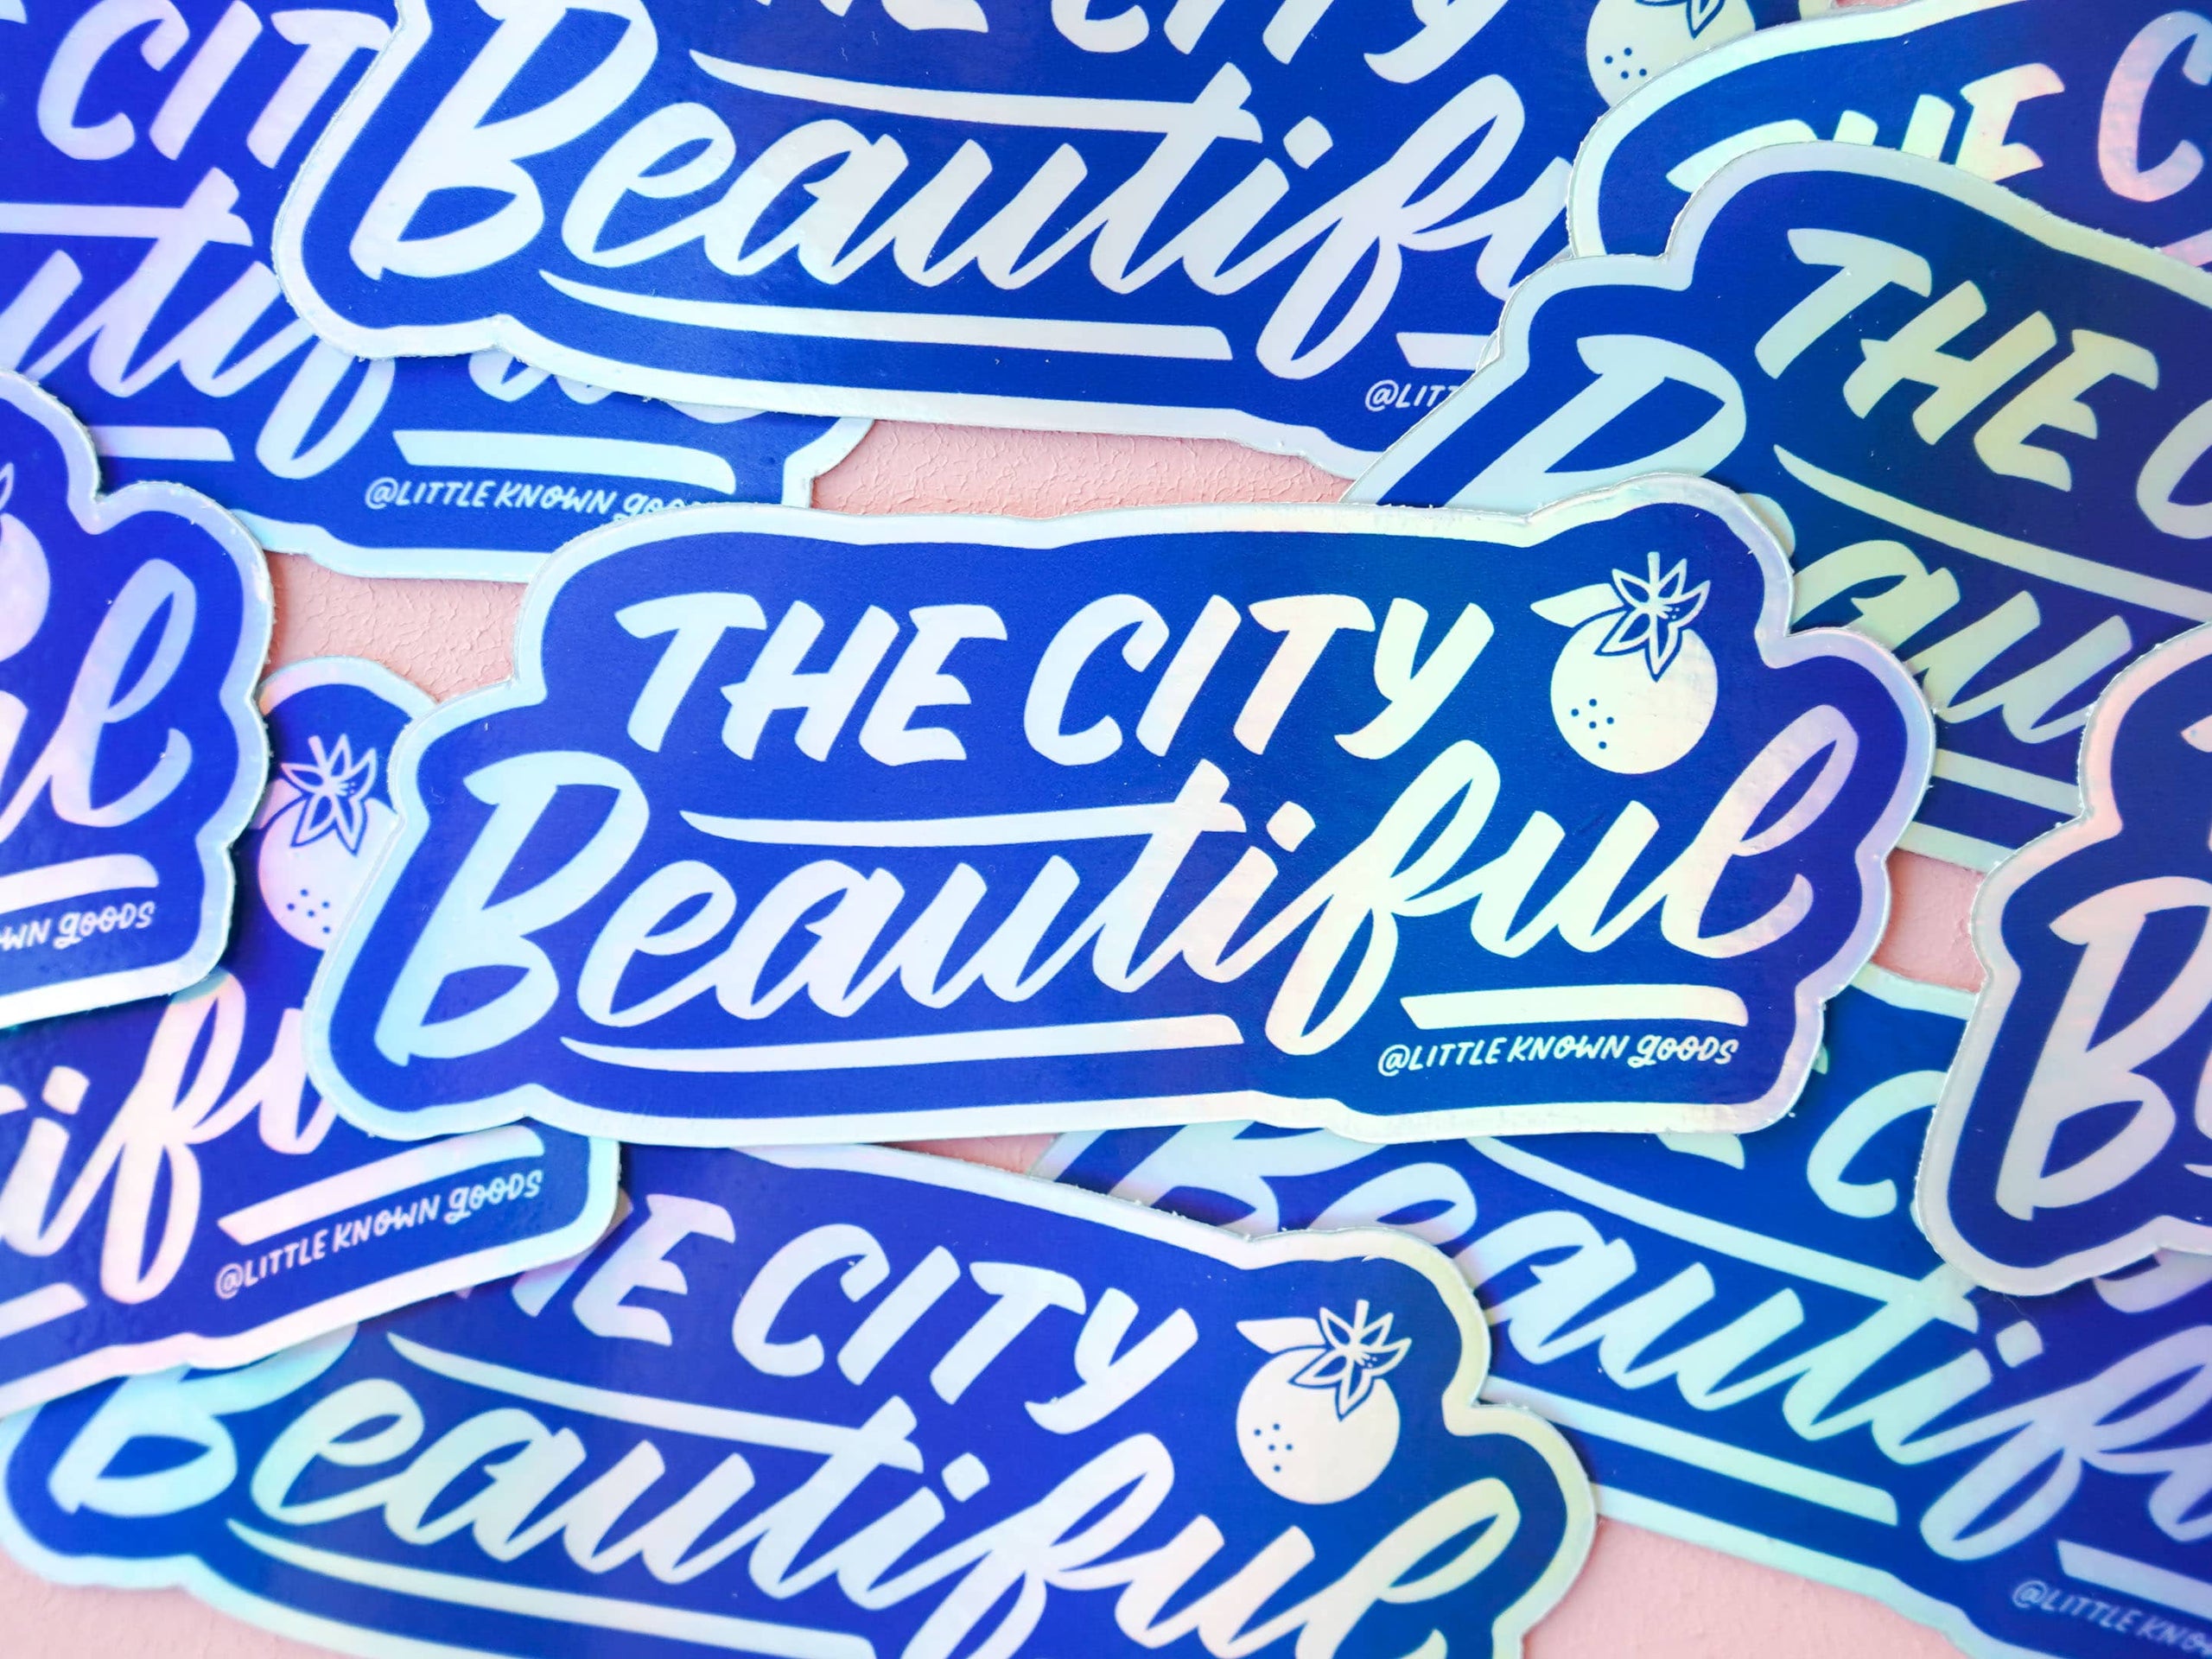 City Beautiful Holographic Sticker